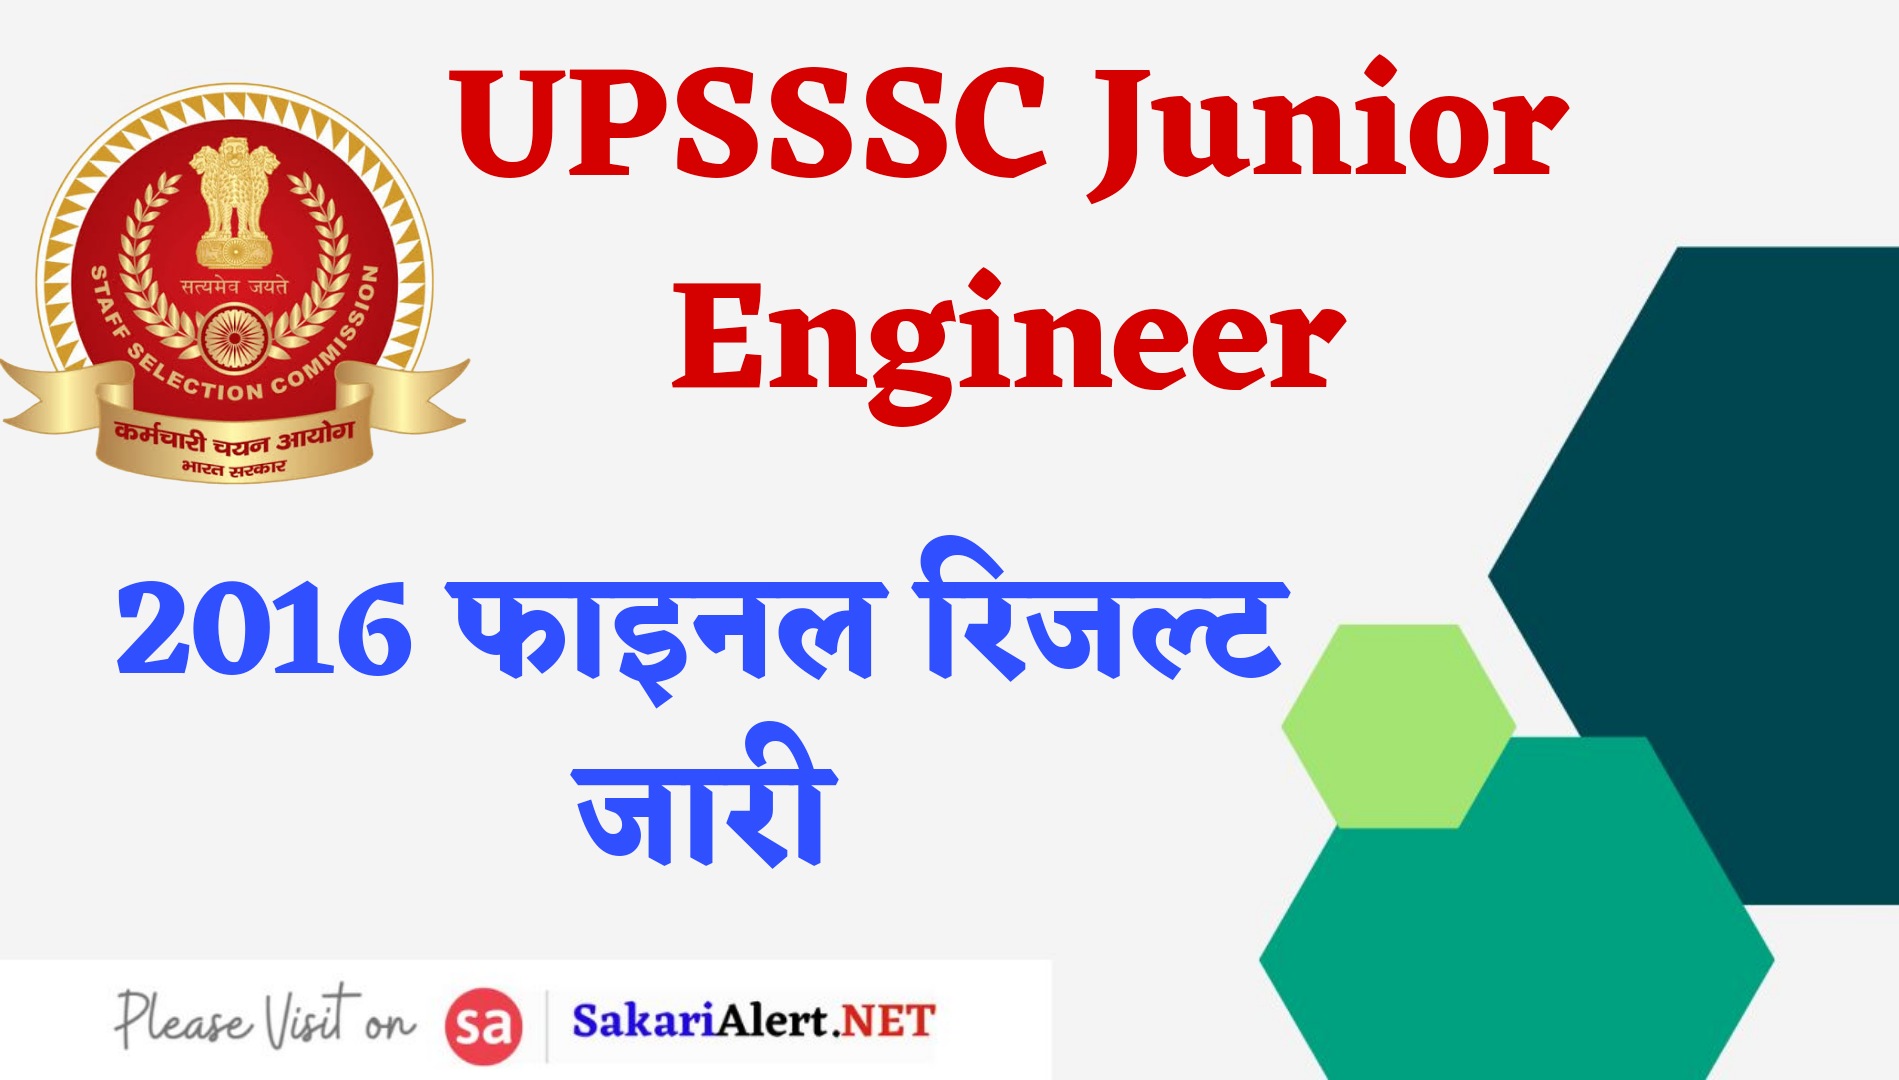 UPSSSC Junior Engineer 2016 Final Result